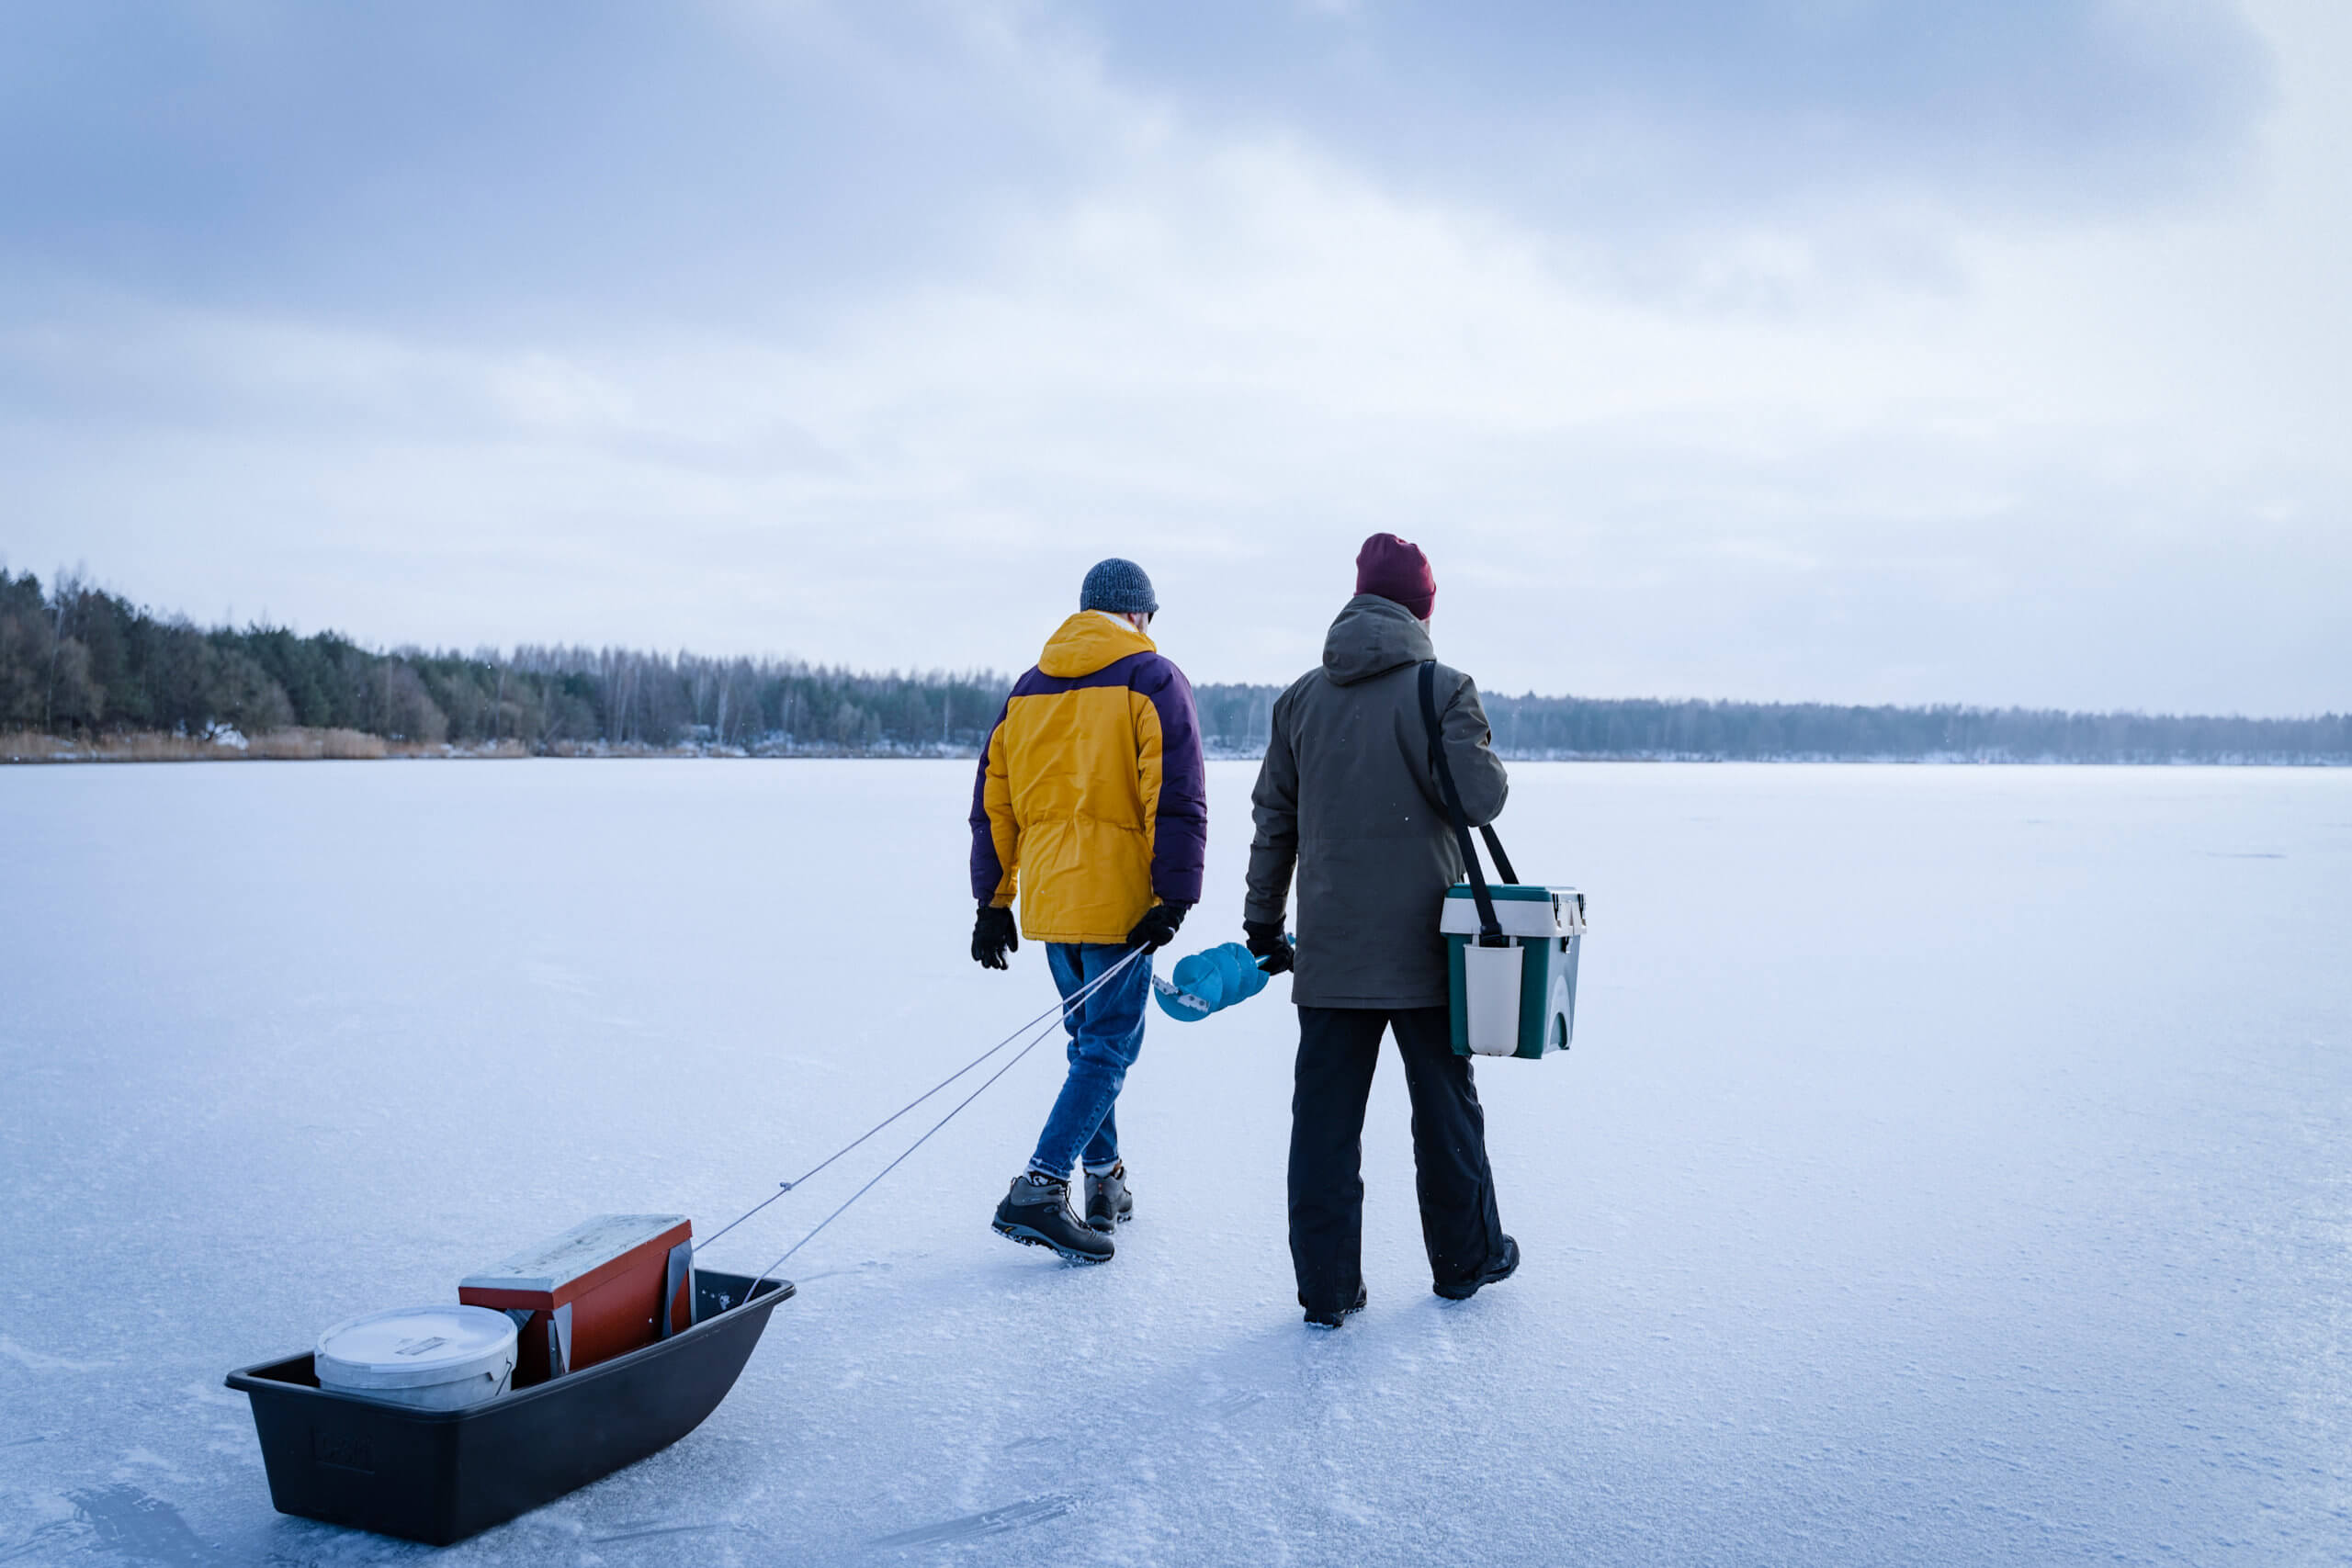 Two men walking on a frozen lake on their way to start ice fishing